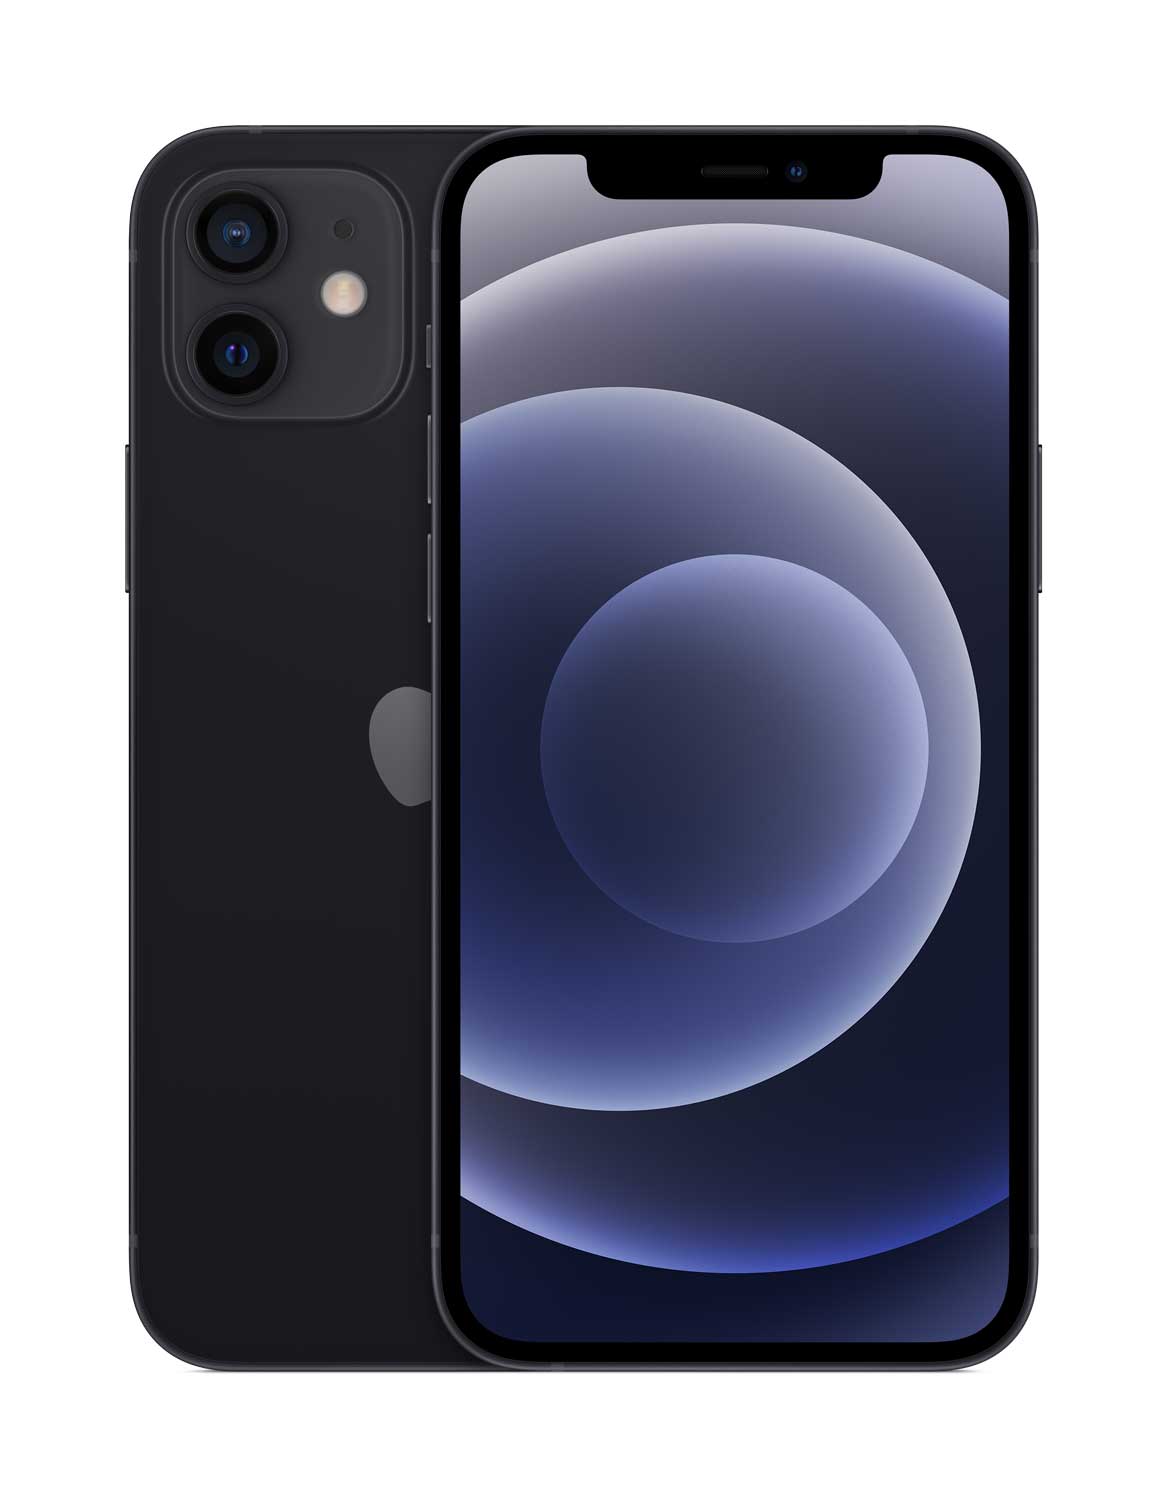 Apple iPhone 12 - Smartphone - Dual-SIM - 5G NR - 128GB - CDMA / GSM - 6.1 - 2532 x 1170 Pixel (460 ppi (Pixel pro )) - Super Retina XDR Display (12 MP Vorderkamera) - 2 x Rückkamera - Schwarz (MGJA3ZD/A) von Apple